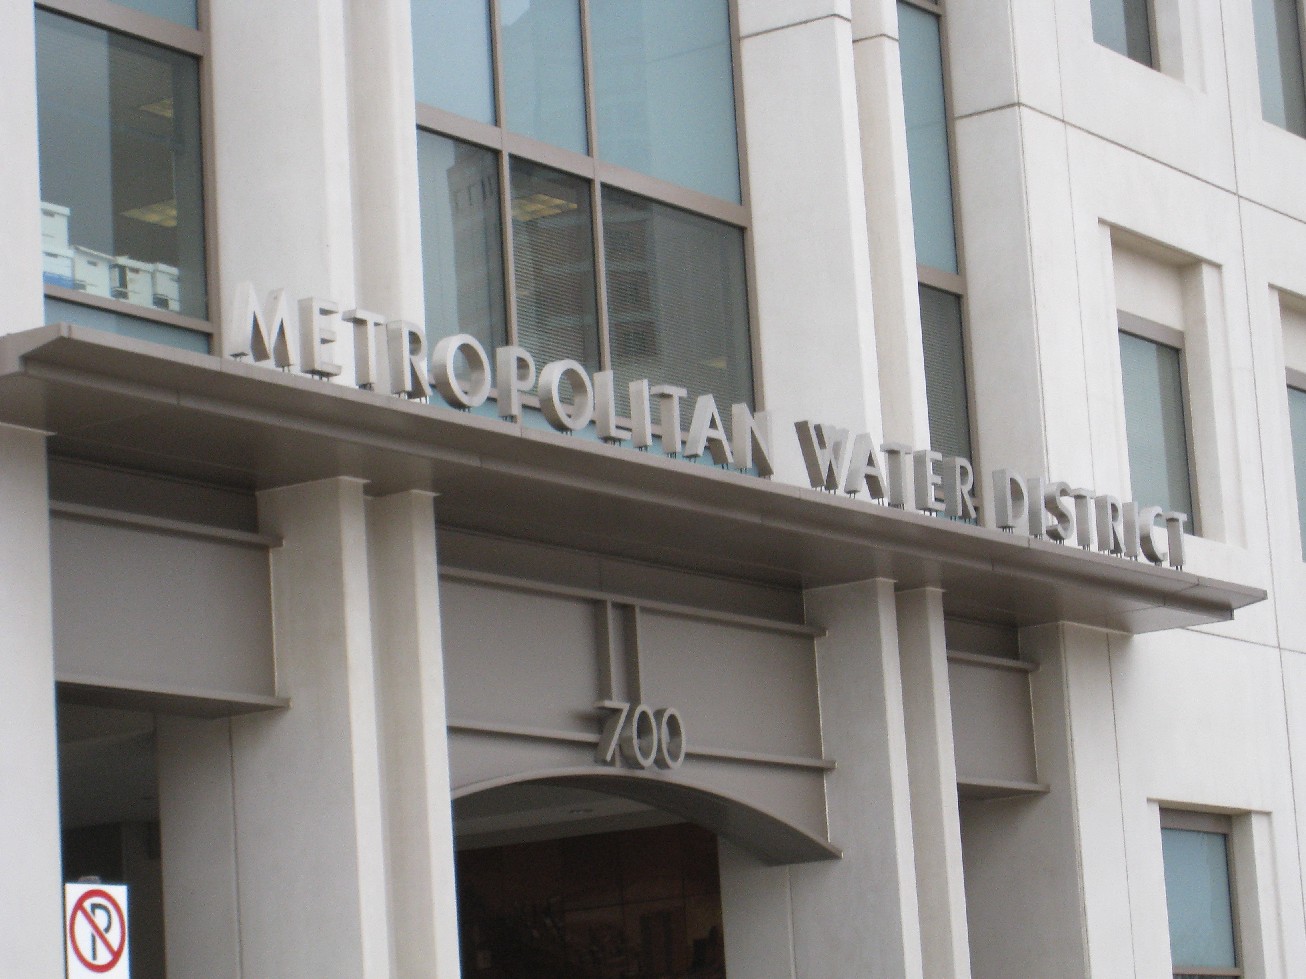 metropolitan-water-district-cuts-water-supplies-increases-rates